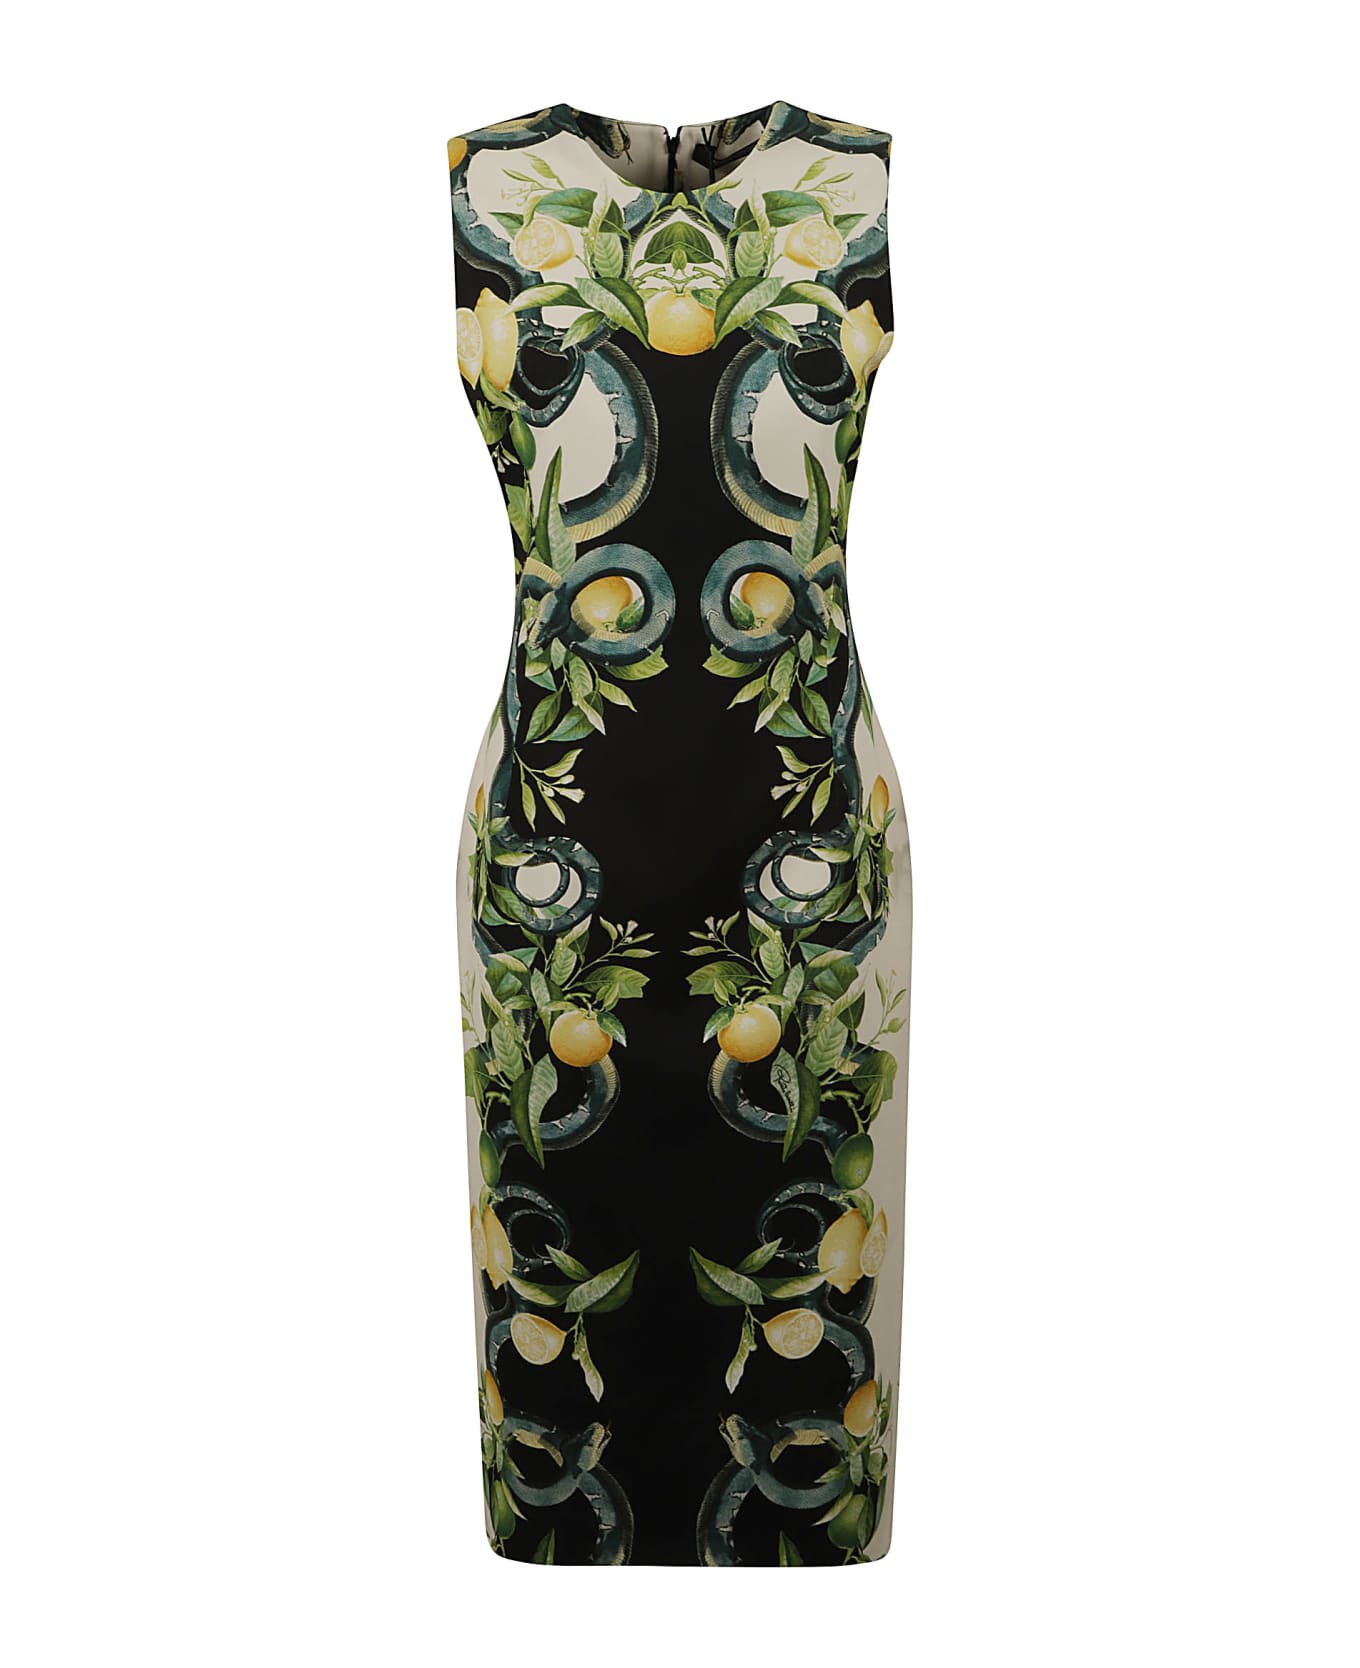 Roberto Cavalli Lemon Snake Printed Sleeveless Dress - Black